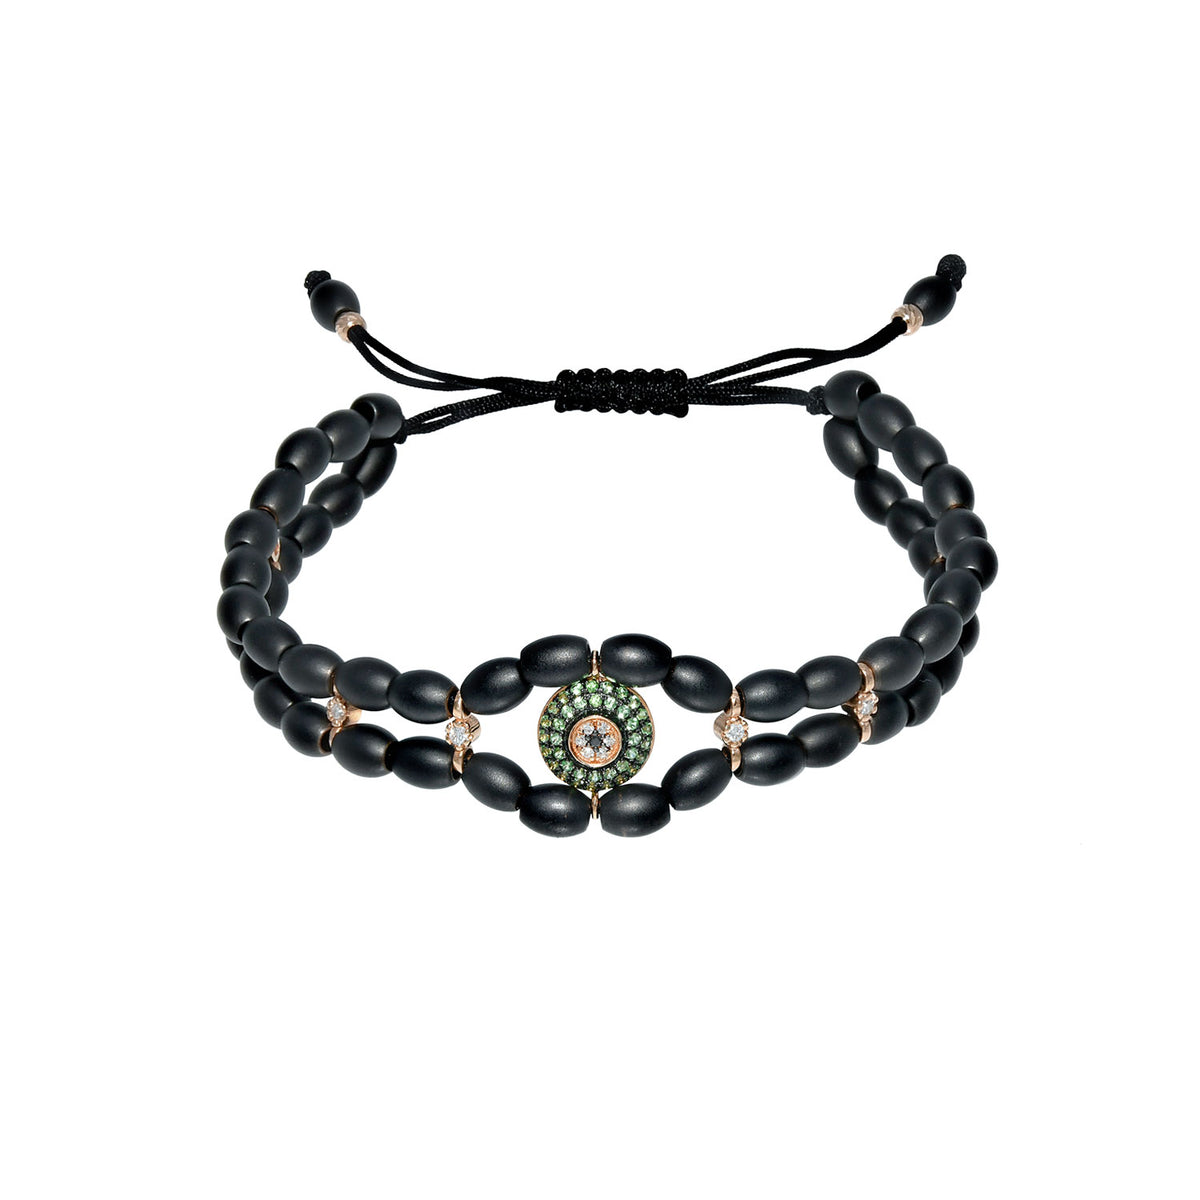 Gold evil eye bracelet with diamonds and tsavorite. Ceramic beads make this bracelet an everyday bracelet to wear.